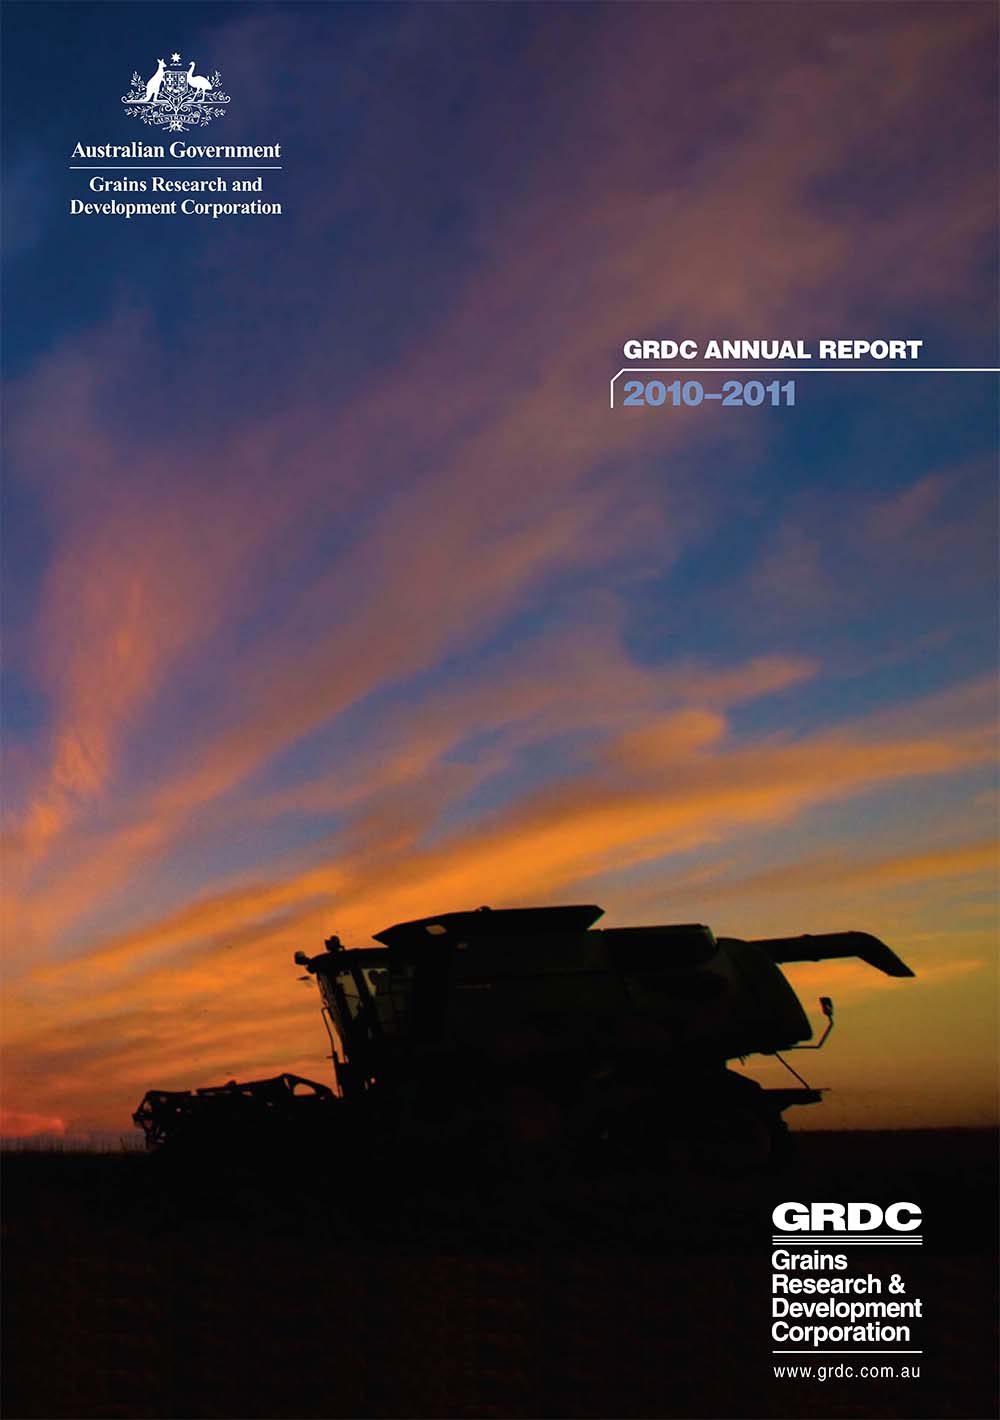 GRDC Annual Report 2010-11 cover